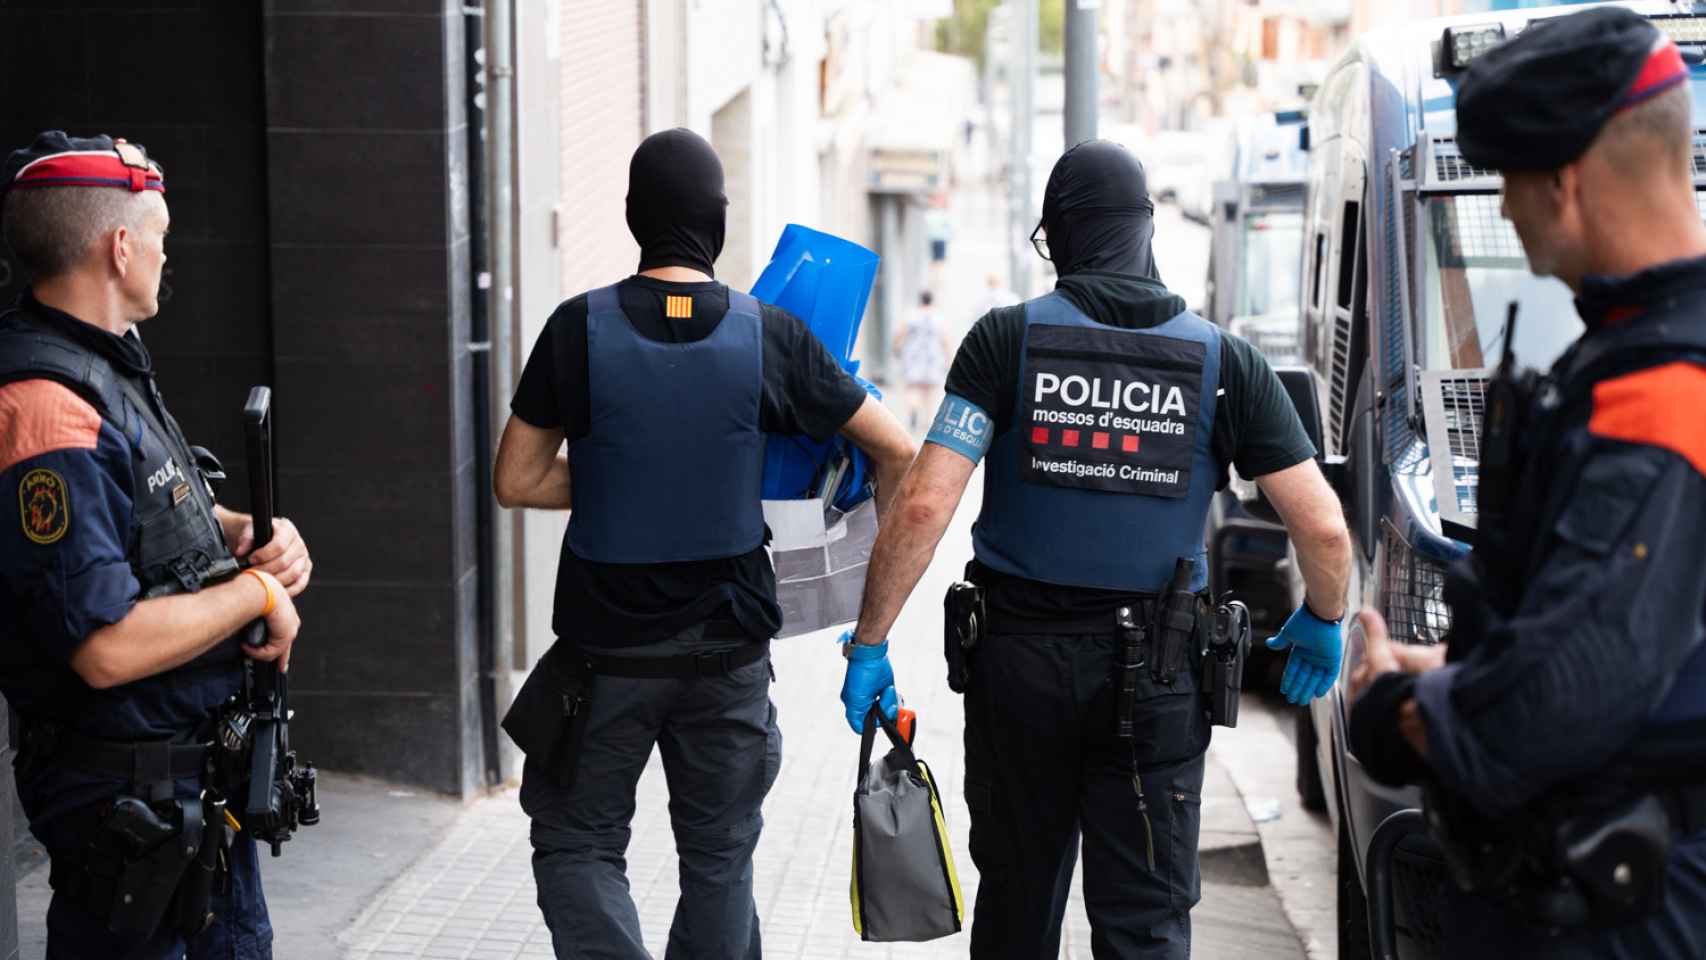 Operación de Mossos d'esquadra contra un grupo criminal que utilizaba armas de fuego